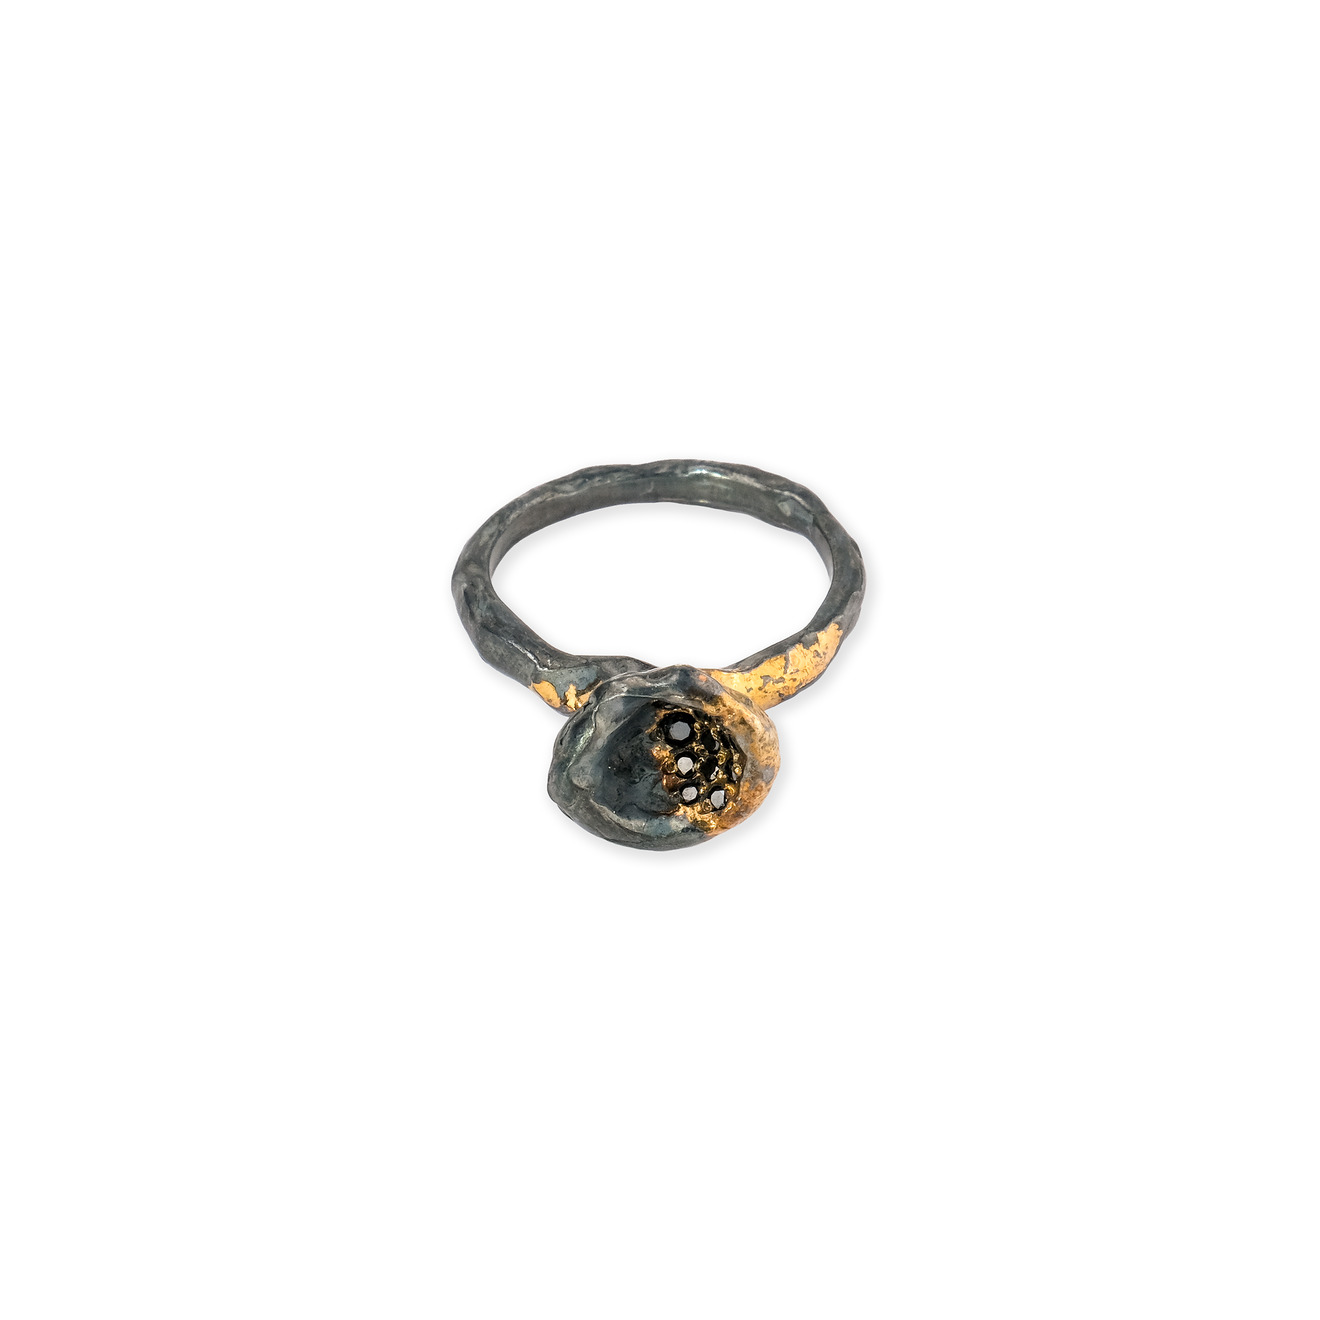 Kintsugi Jewelry Кольцо Soul2 из серебра с позолотой и бриллиантами кольцо с нефритами из серебра с позолотой